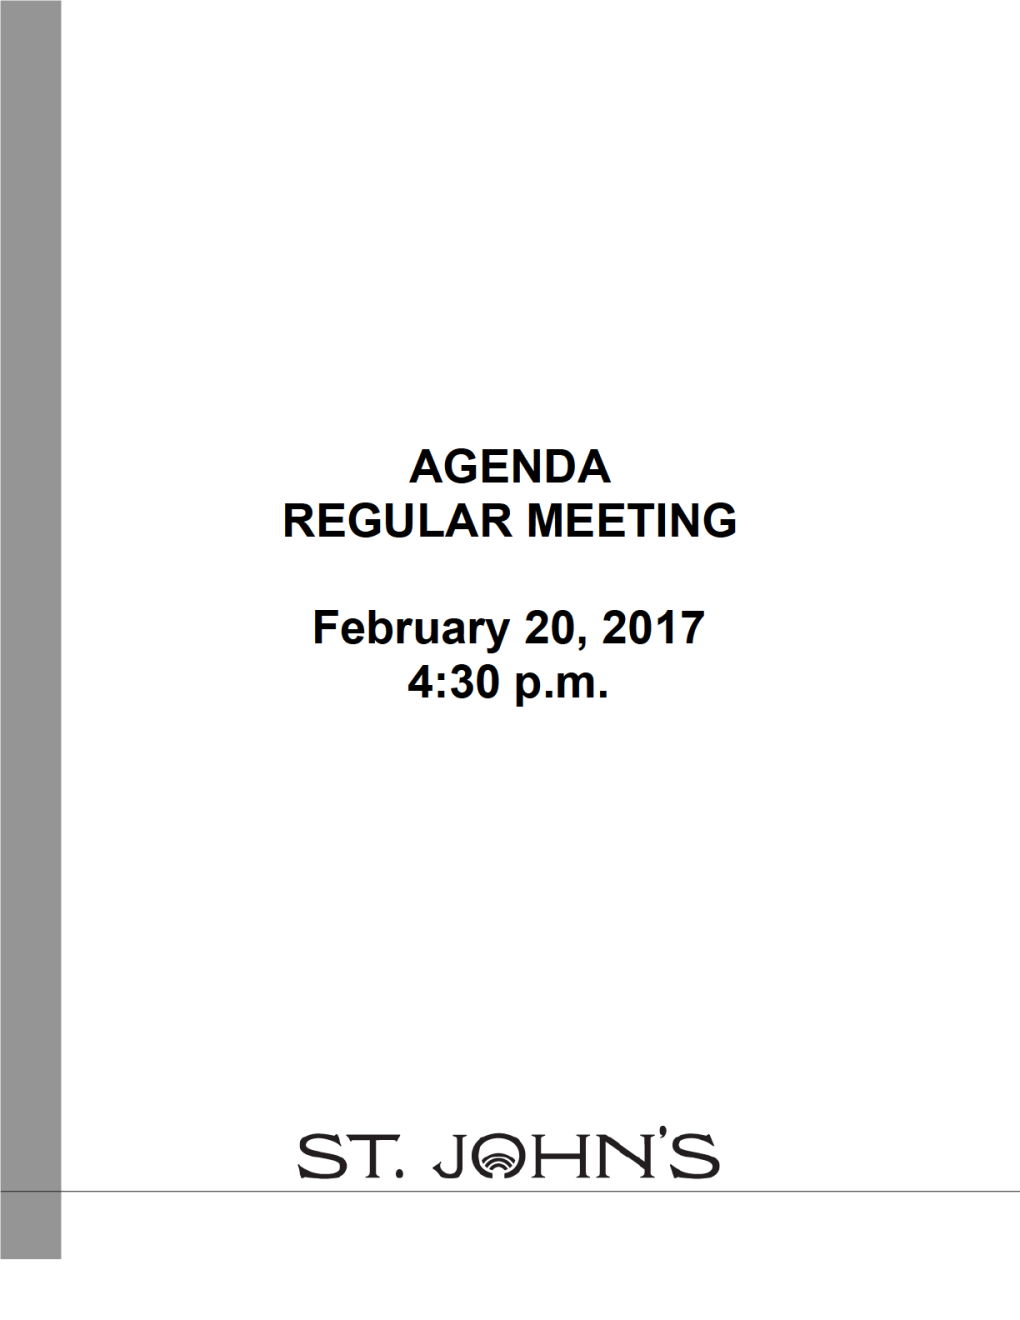 Regular Meeting Agenda February 20, 2017.Pdf